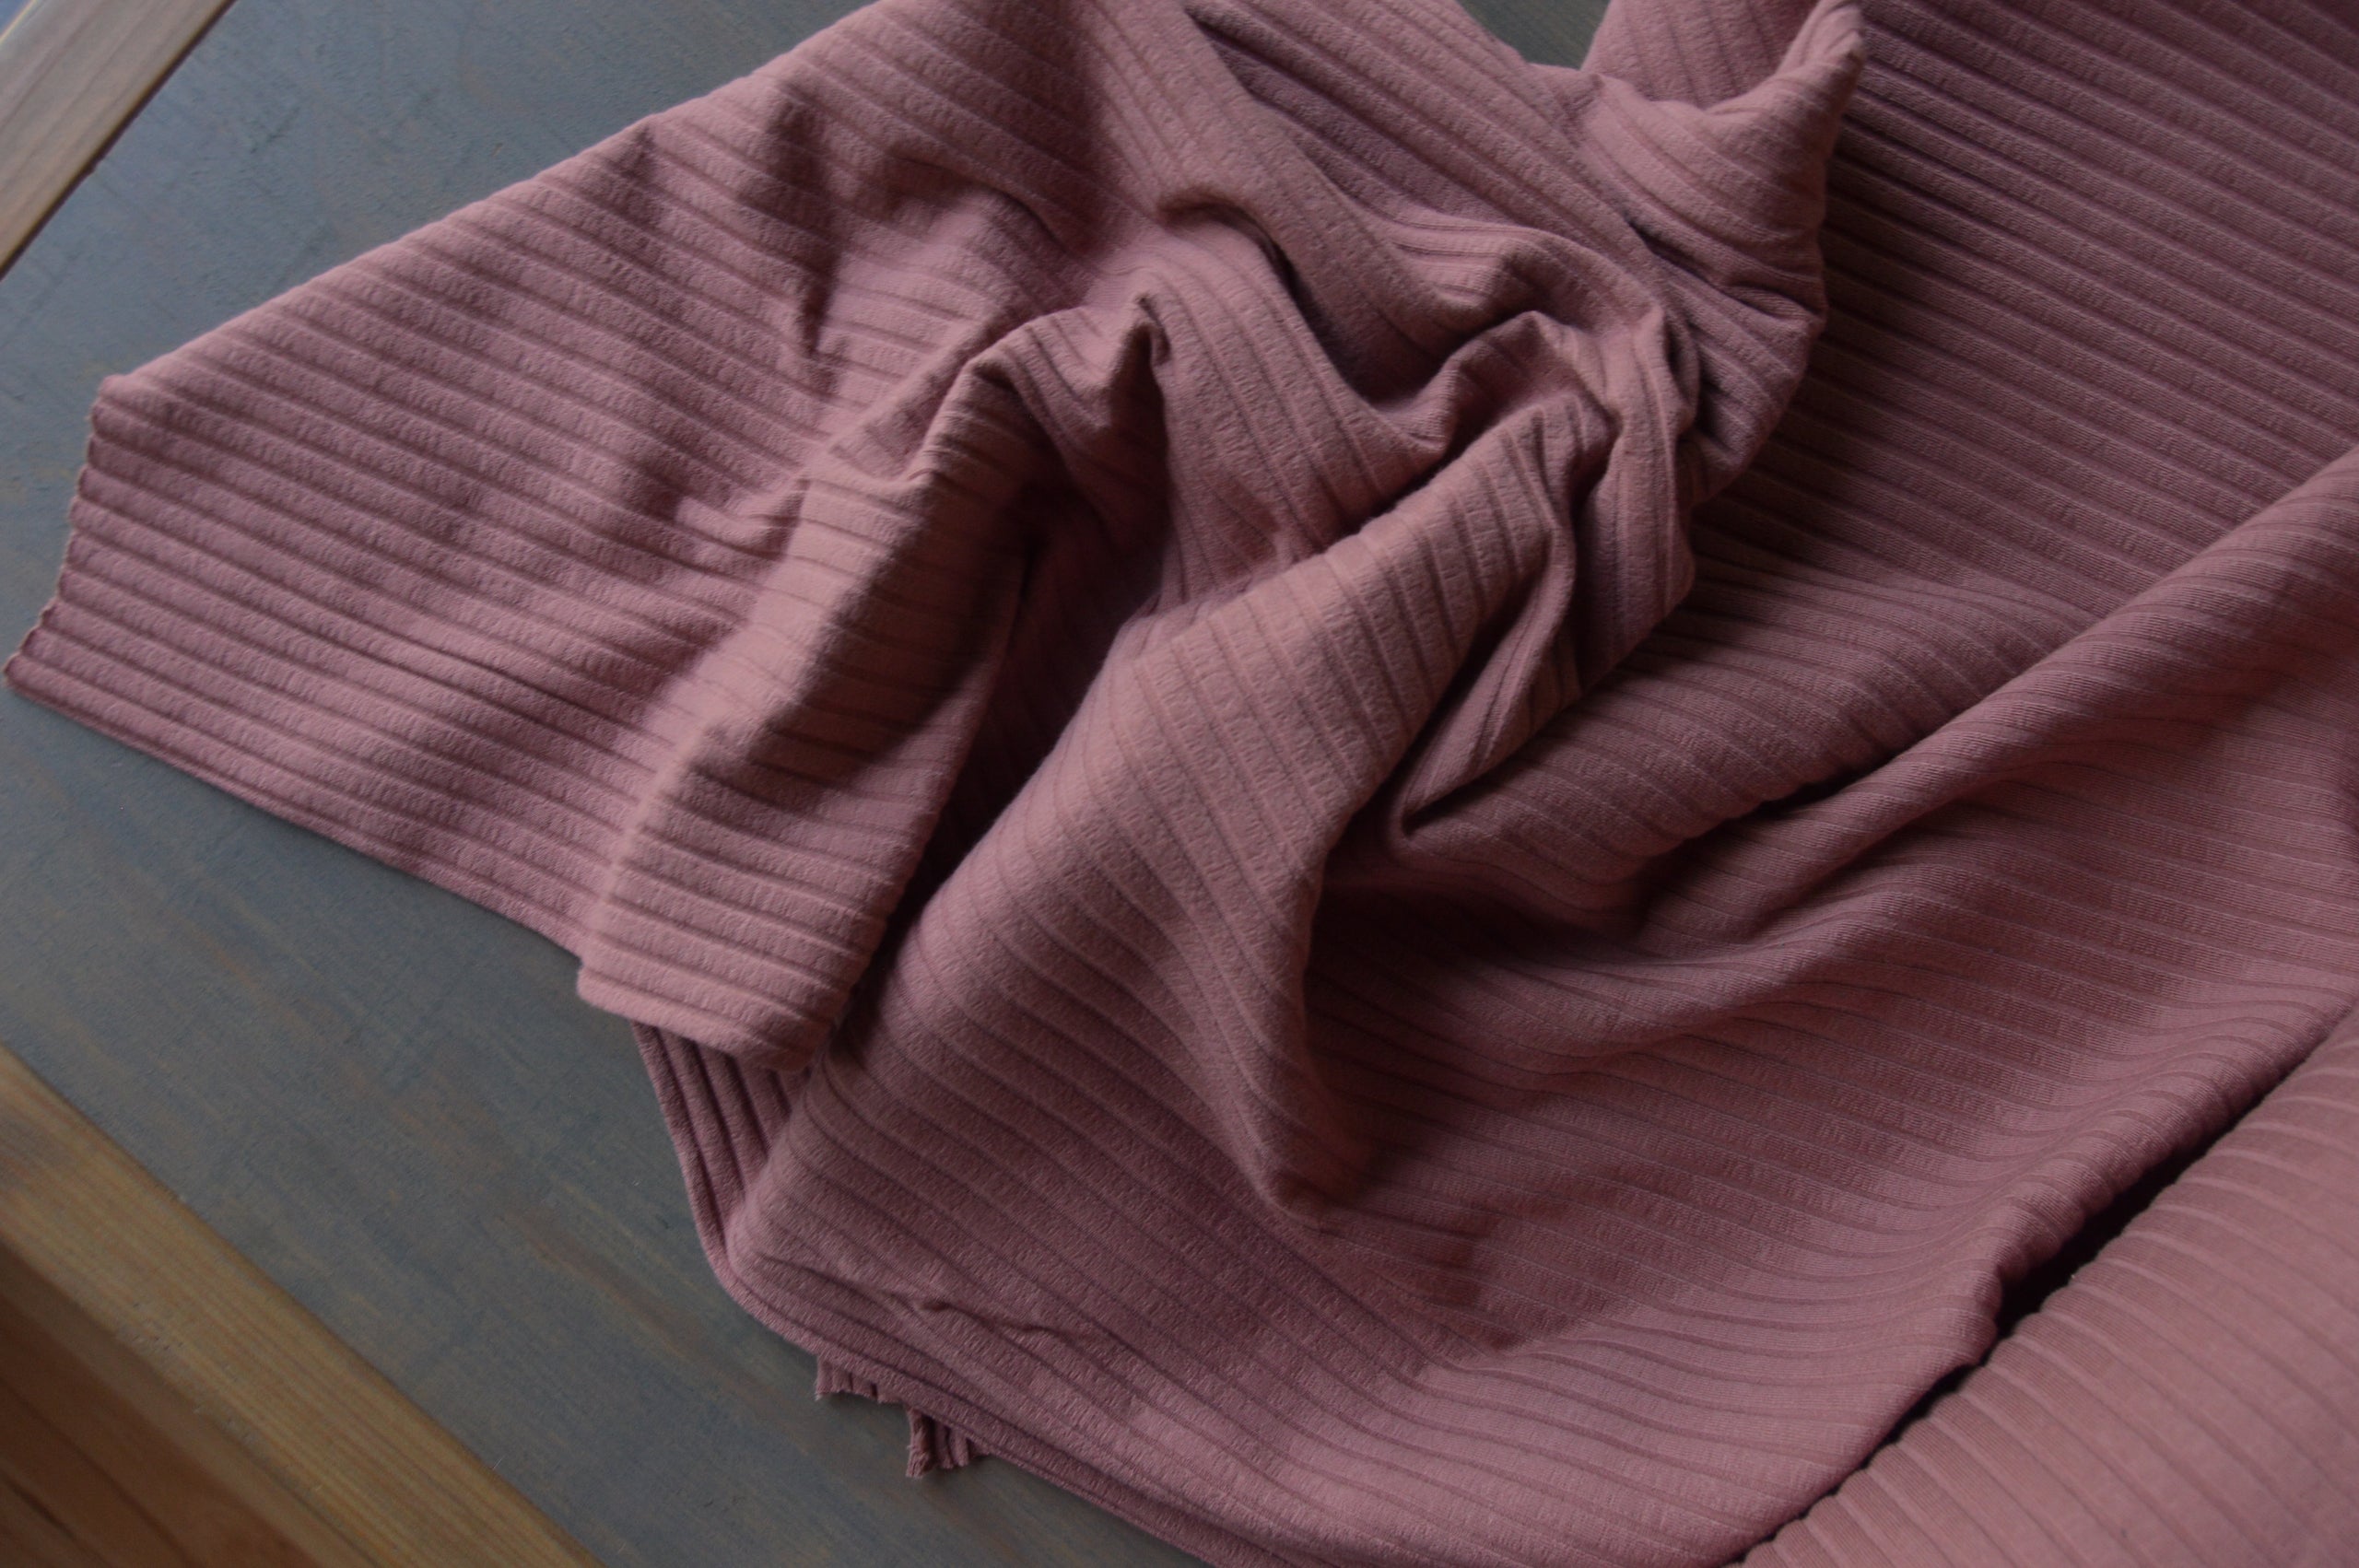 Ripple Rib Jersey Fabric